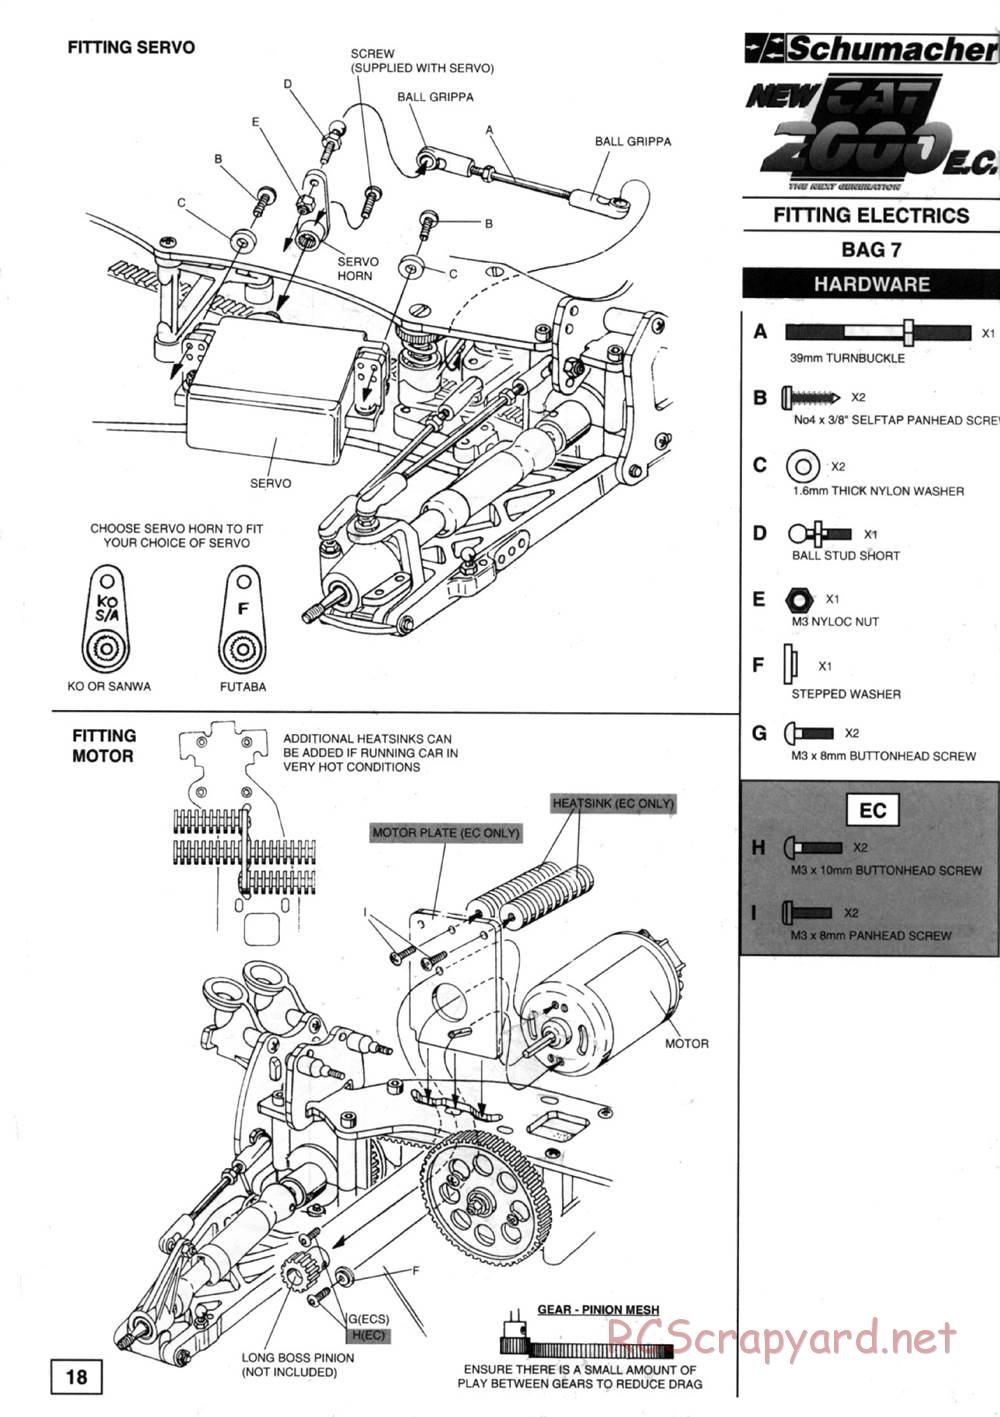 Schumacher - Cat 2000 EC - Manual - Page 24